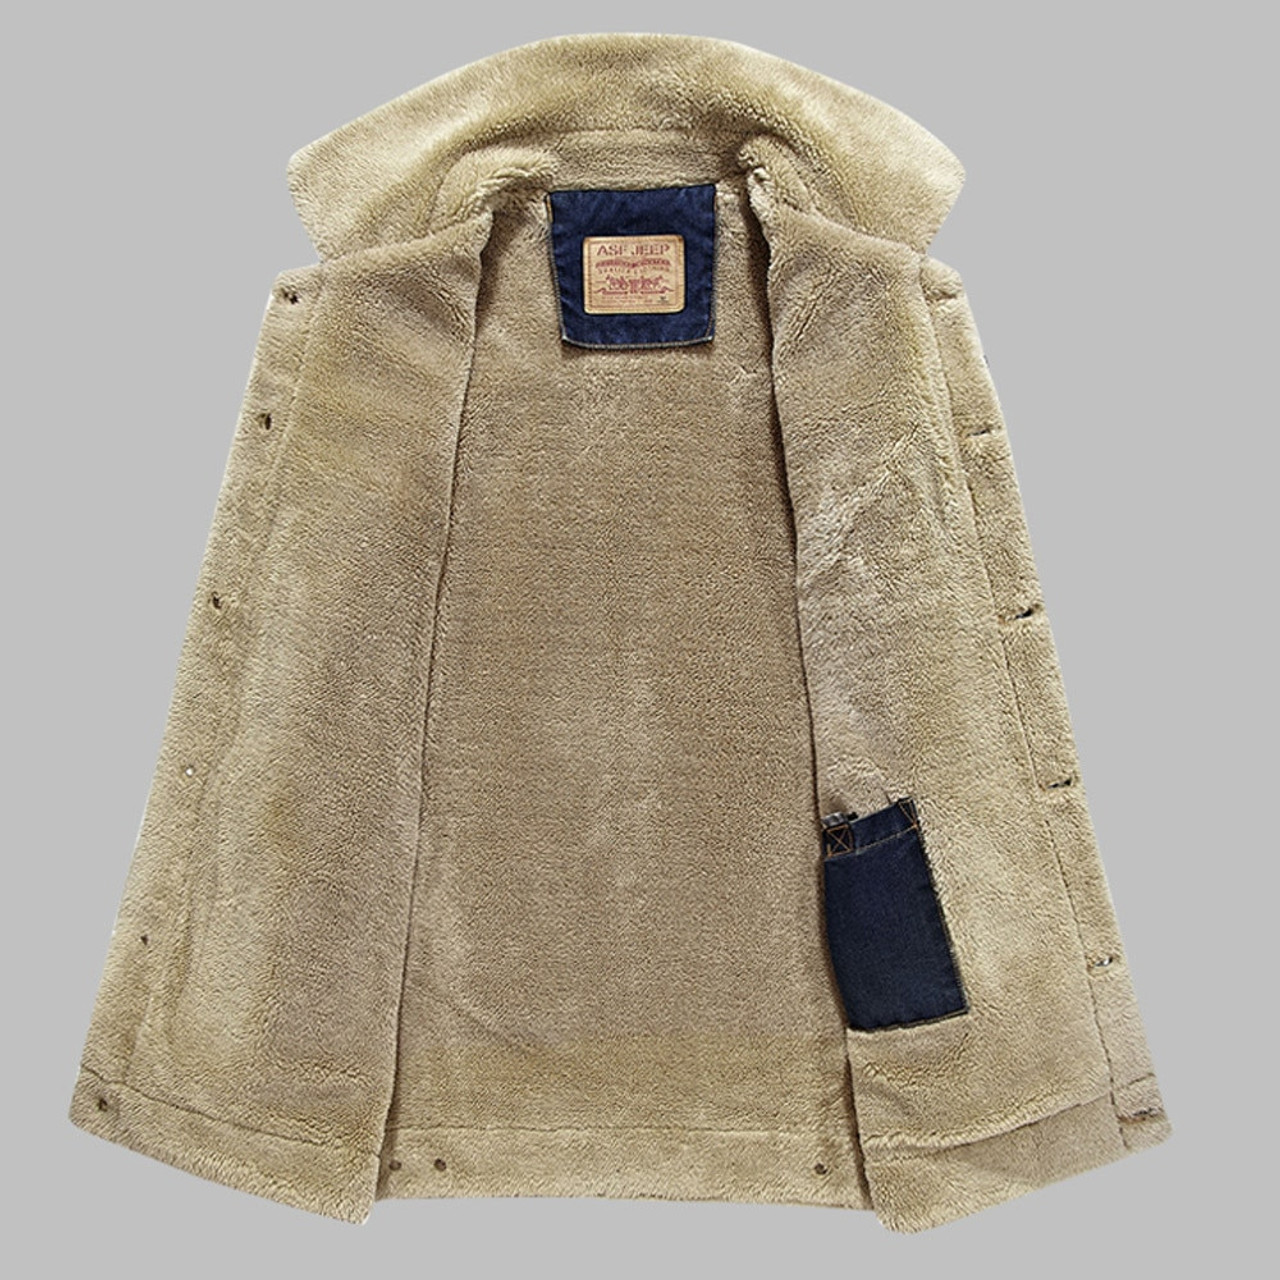 M 6XL men jacket and coats brand clothing denim jacket Fashion Men s Autumn Winter Pocket 04263.1543246217